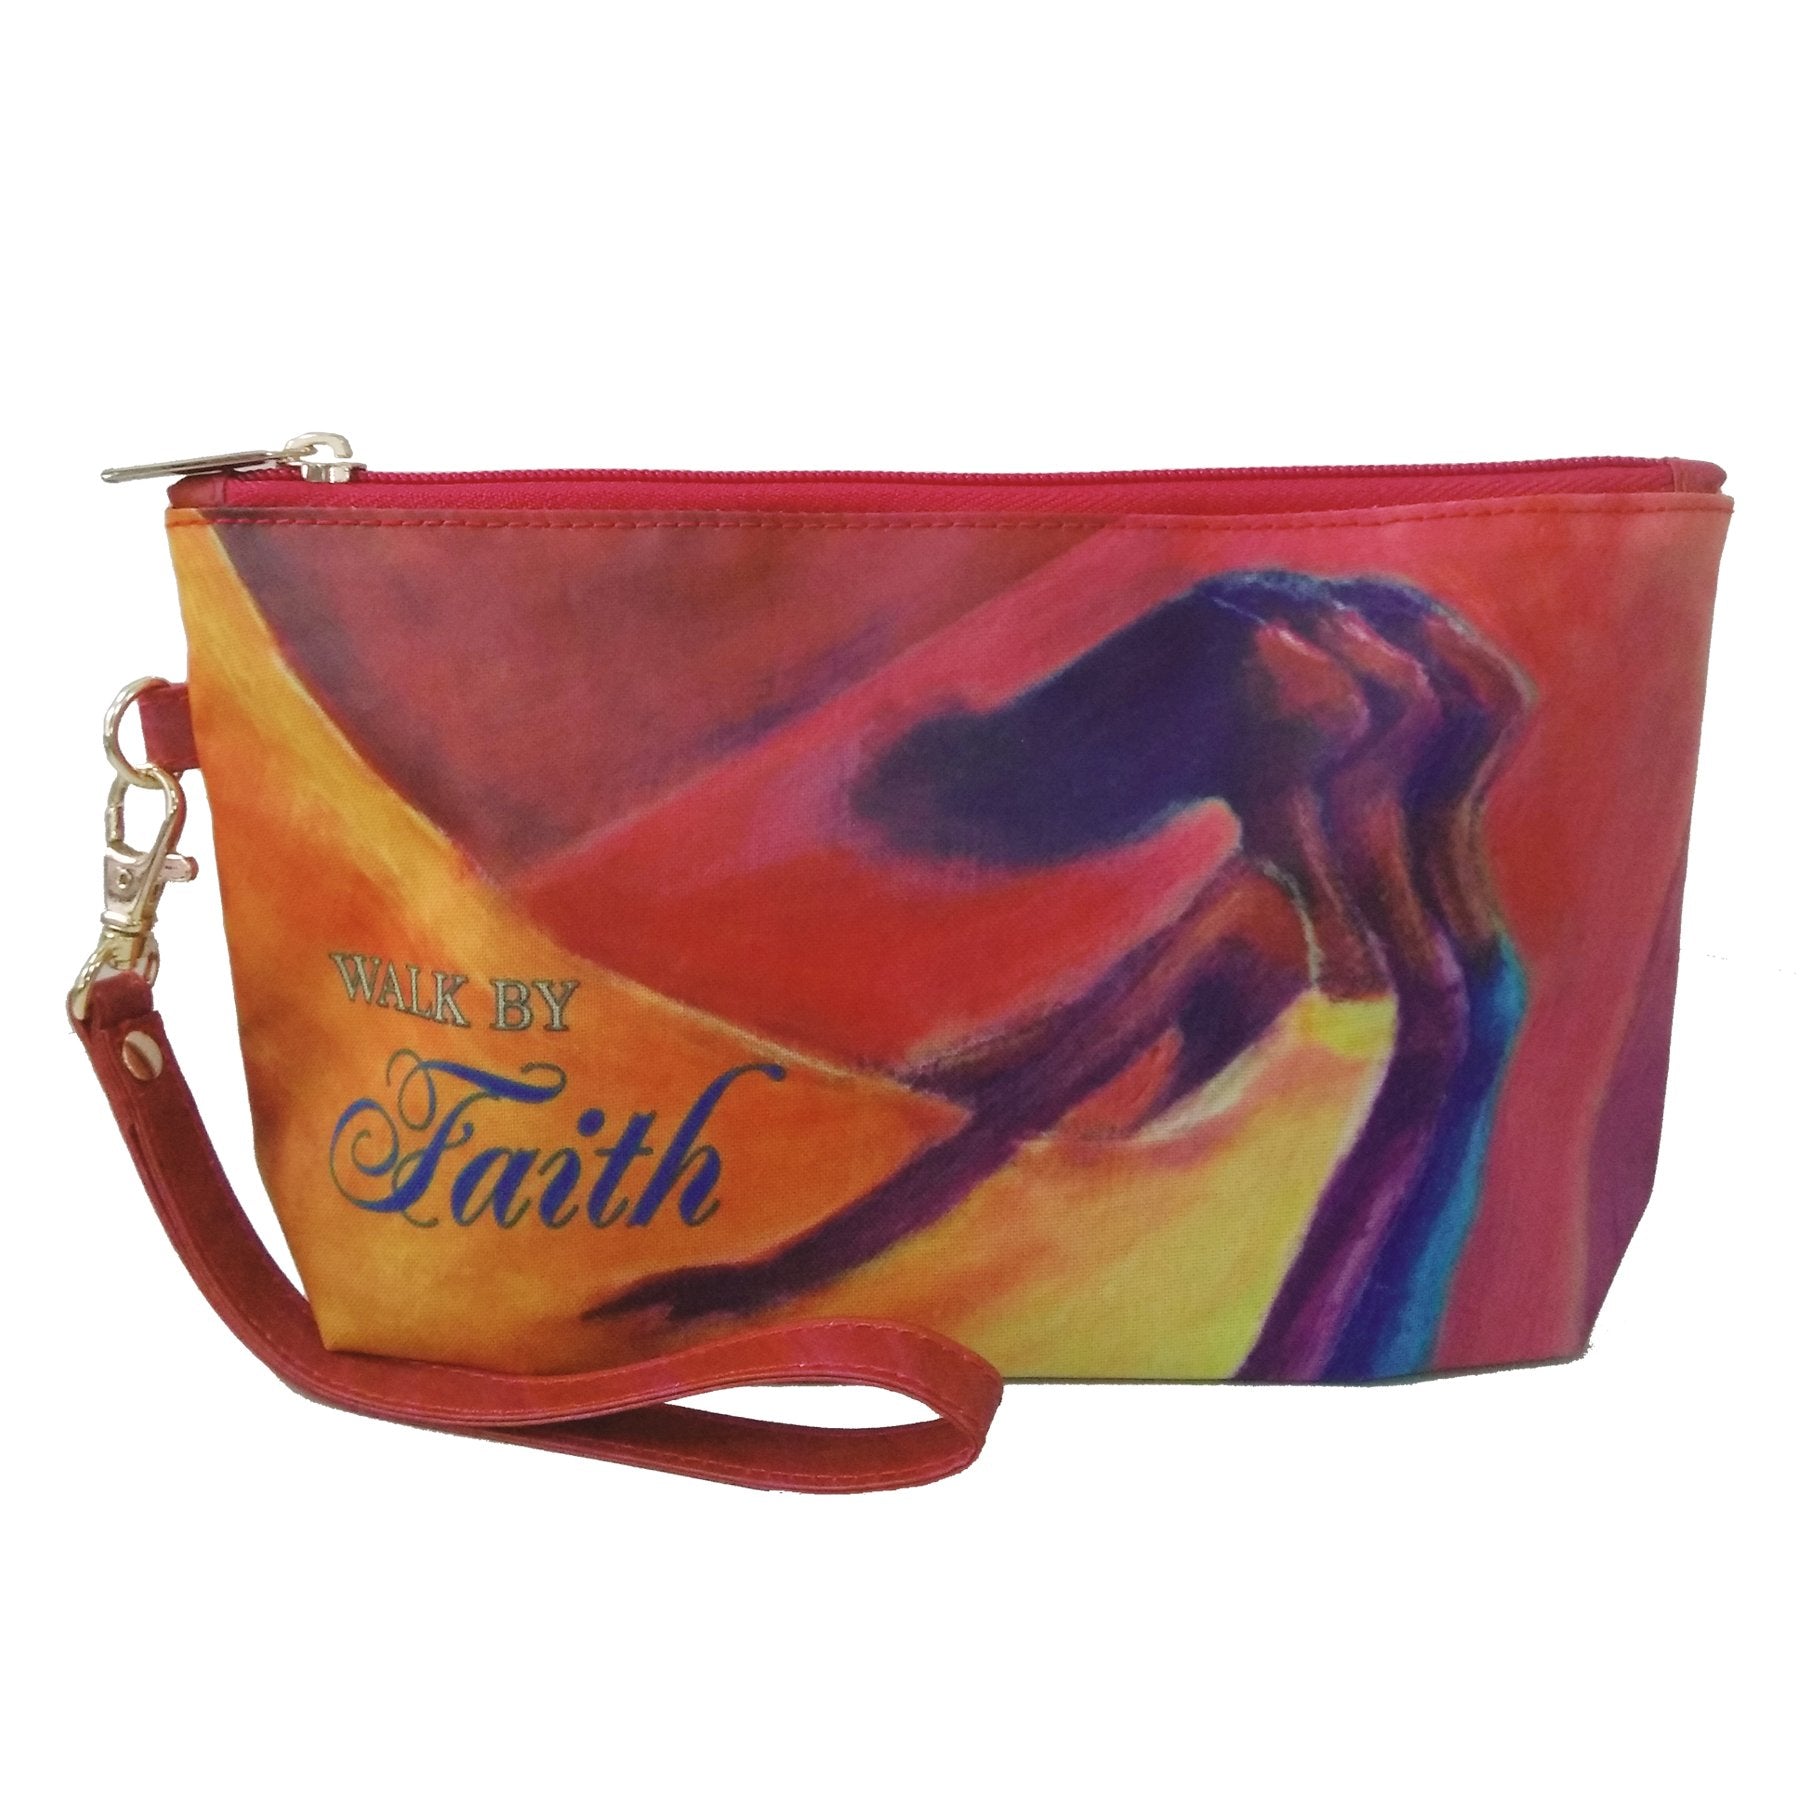 1 of 2: Walk by Faith: African American Cosmetic Bag by Kerream Jones